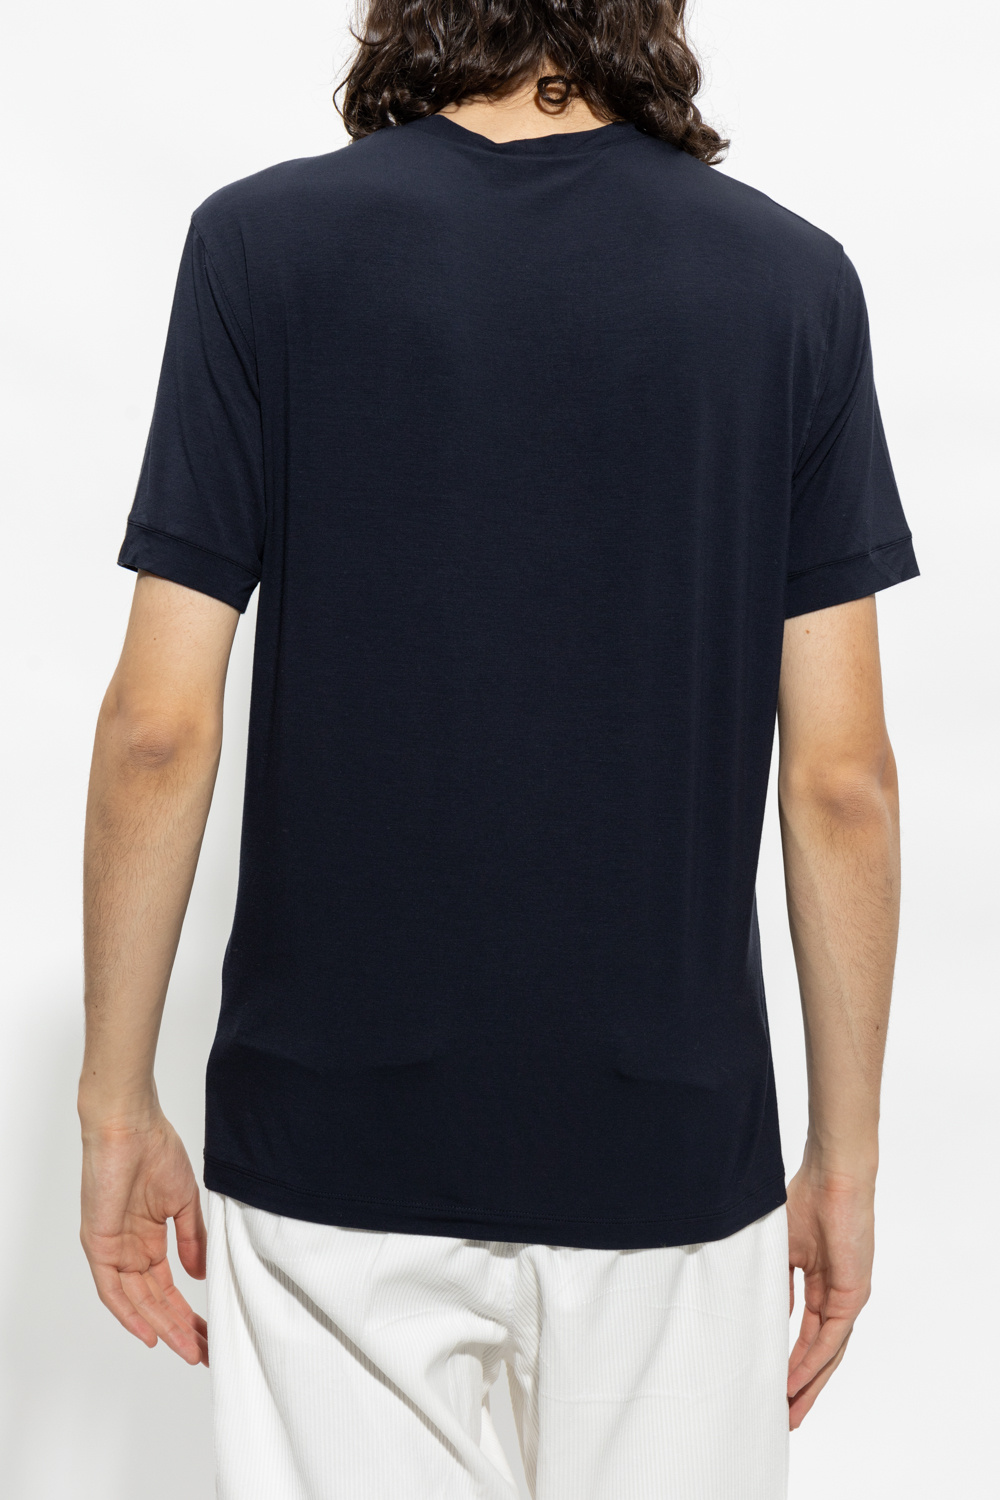 Giorgio REFLECTIVE armani T-shirt with logo